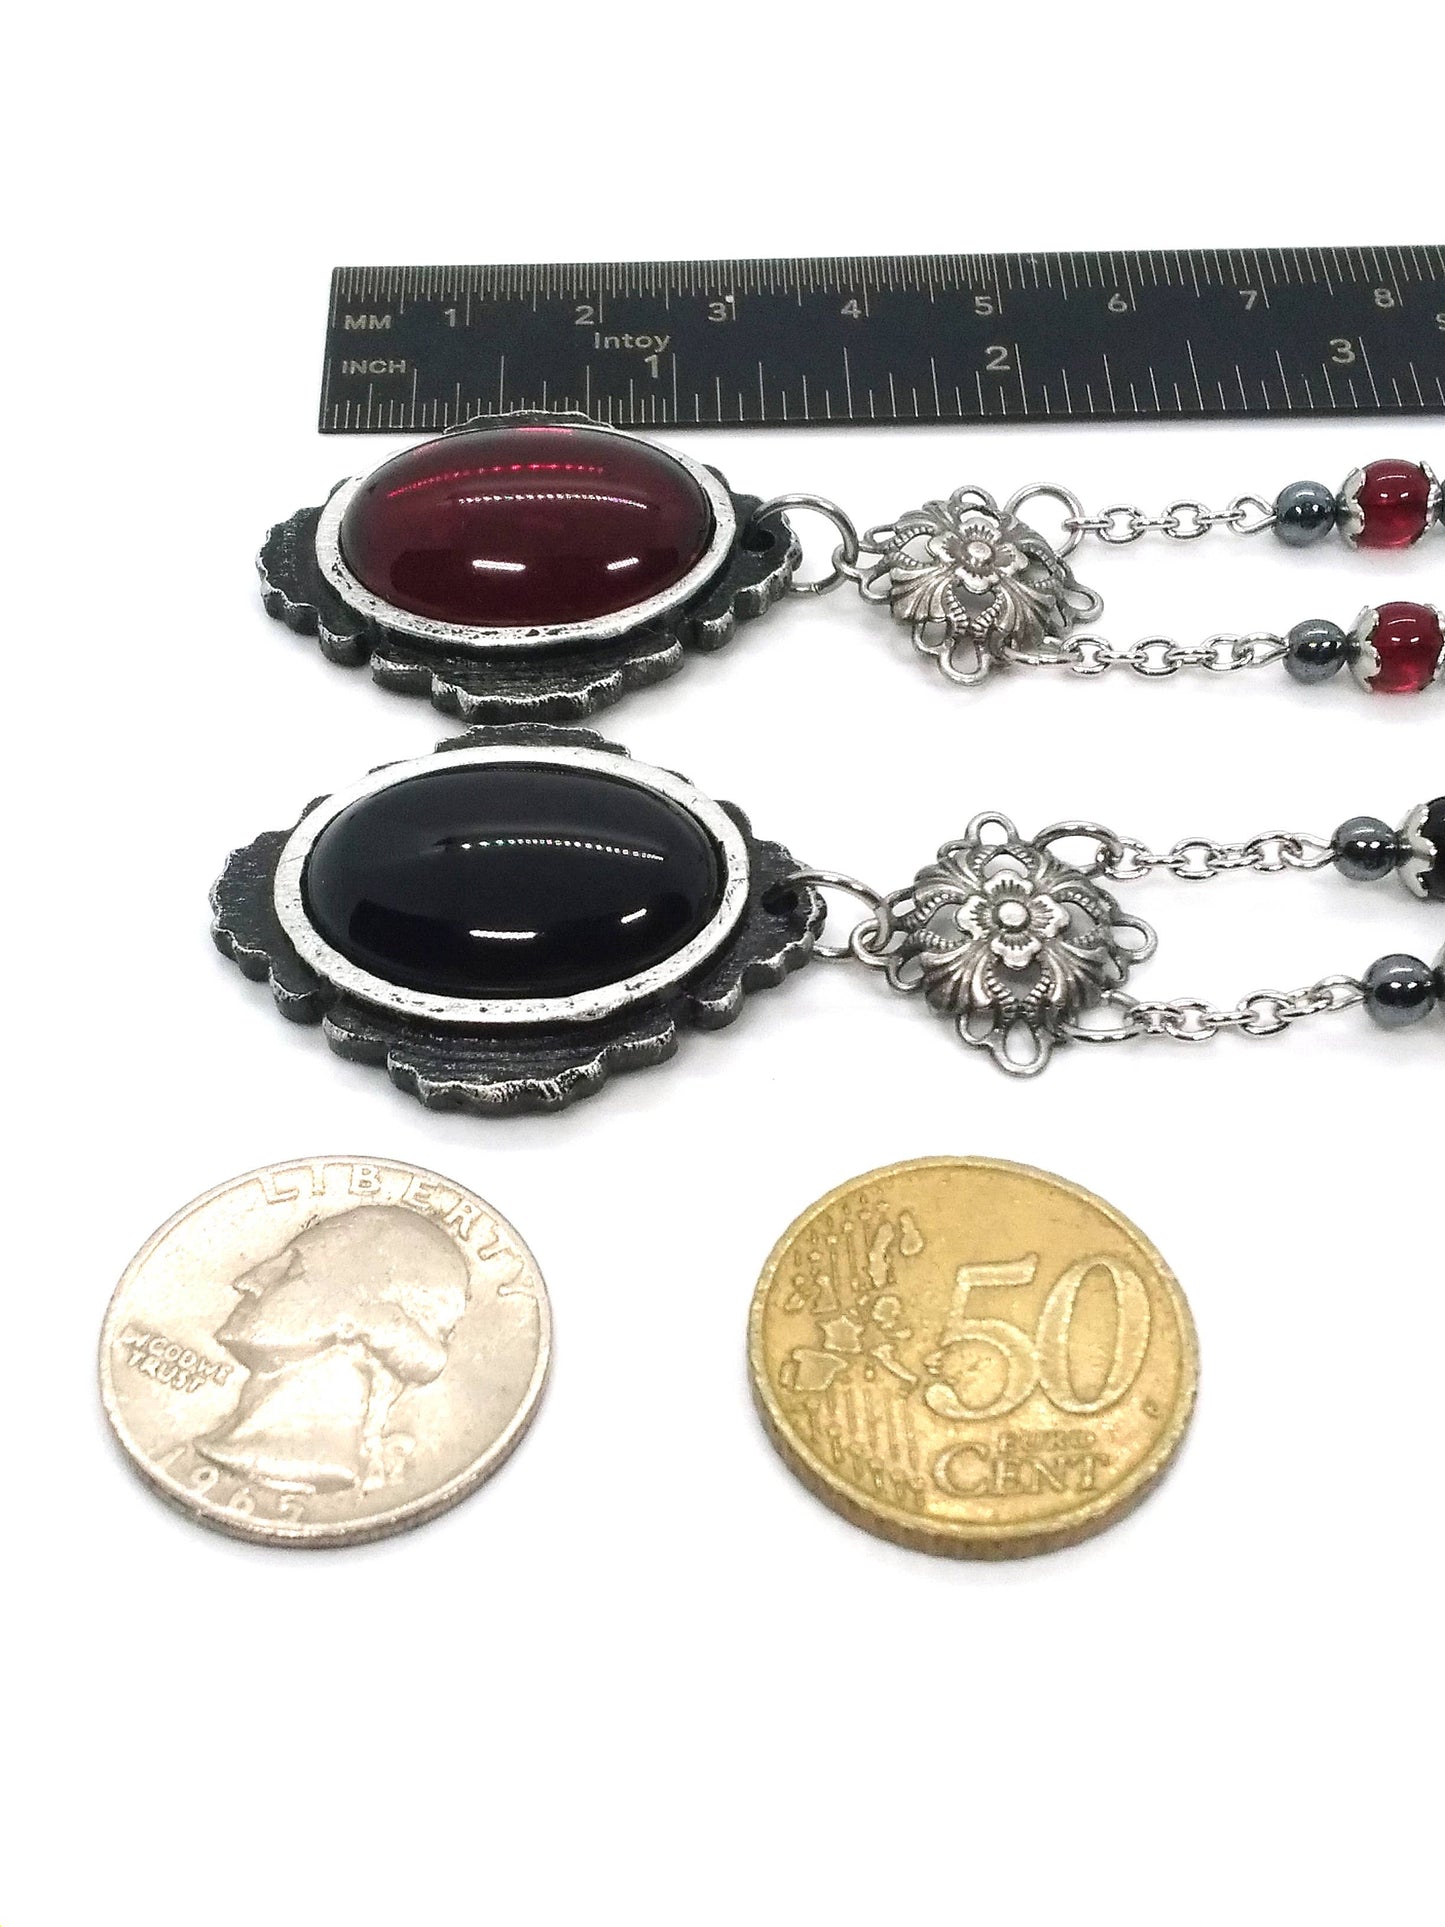 Vampiric Amulet Necklace